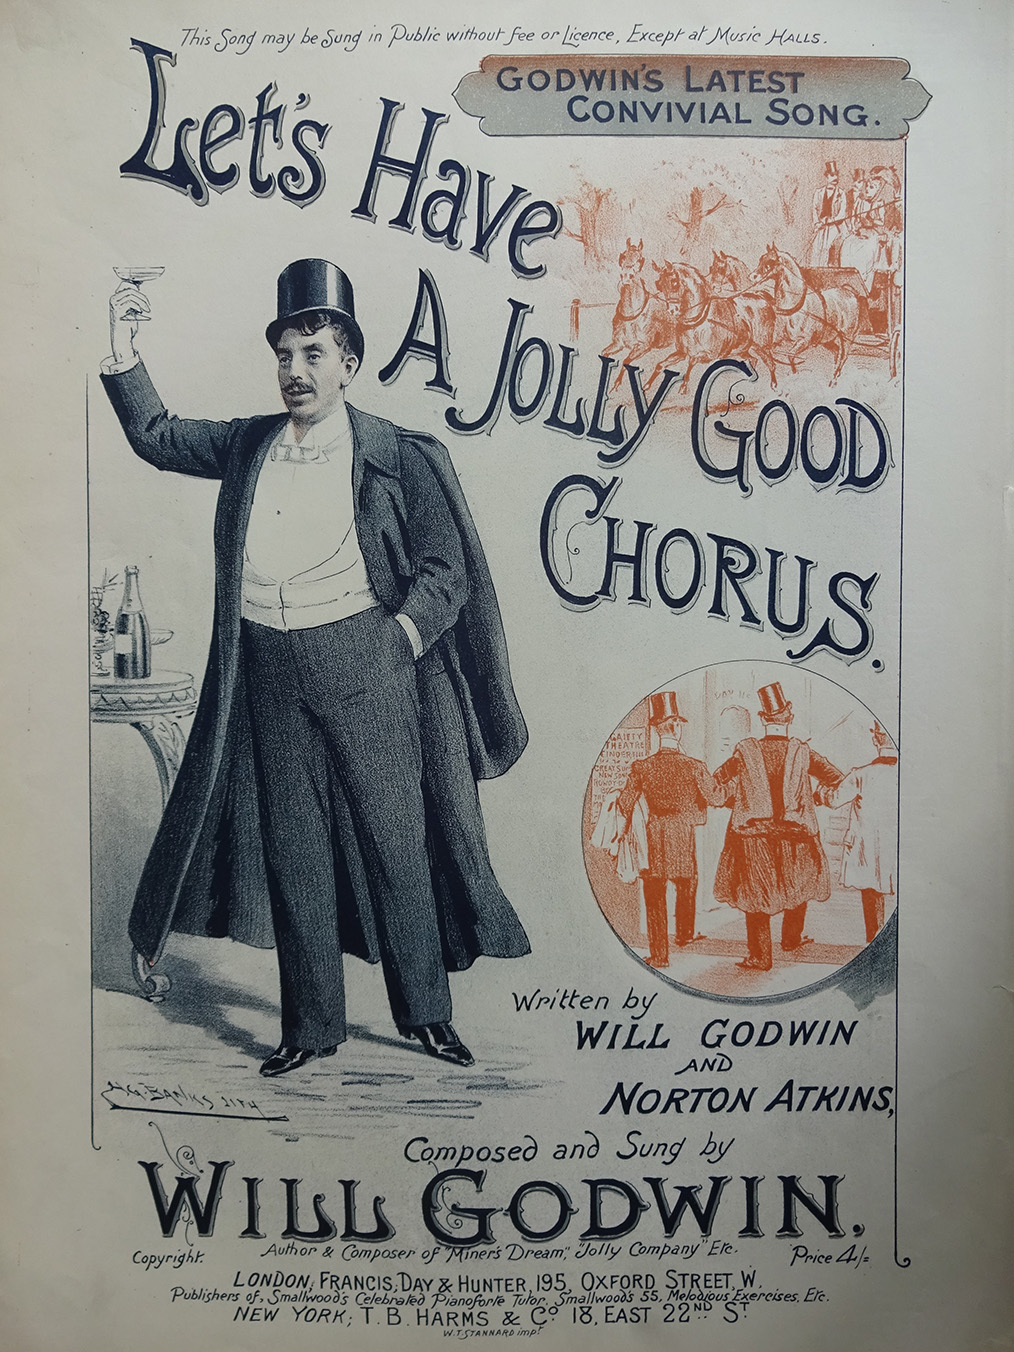 Let's Have A Jolly Good Chorus